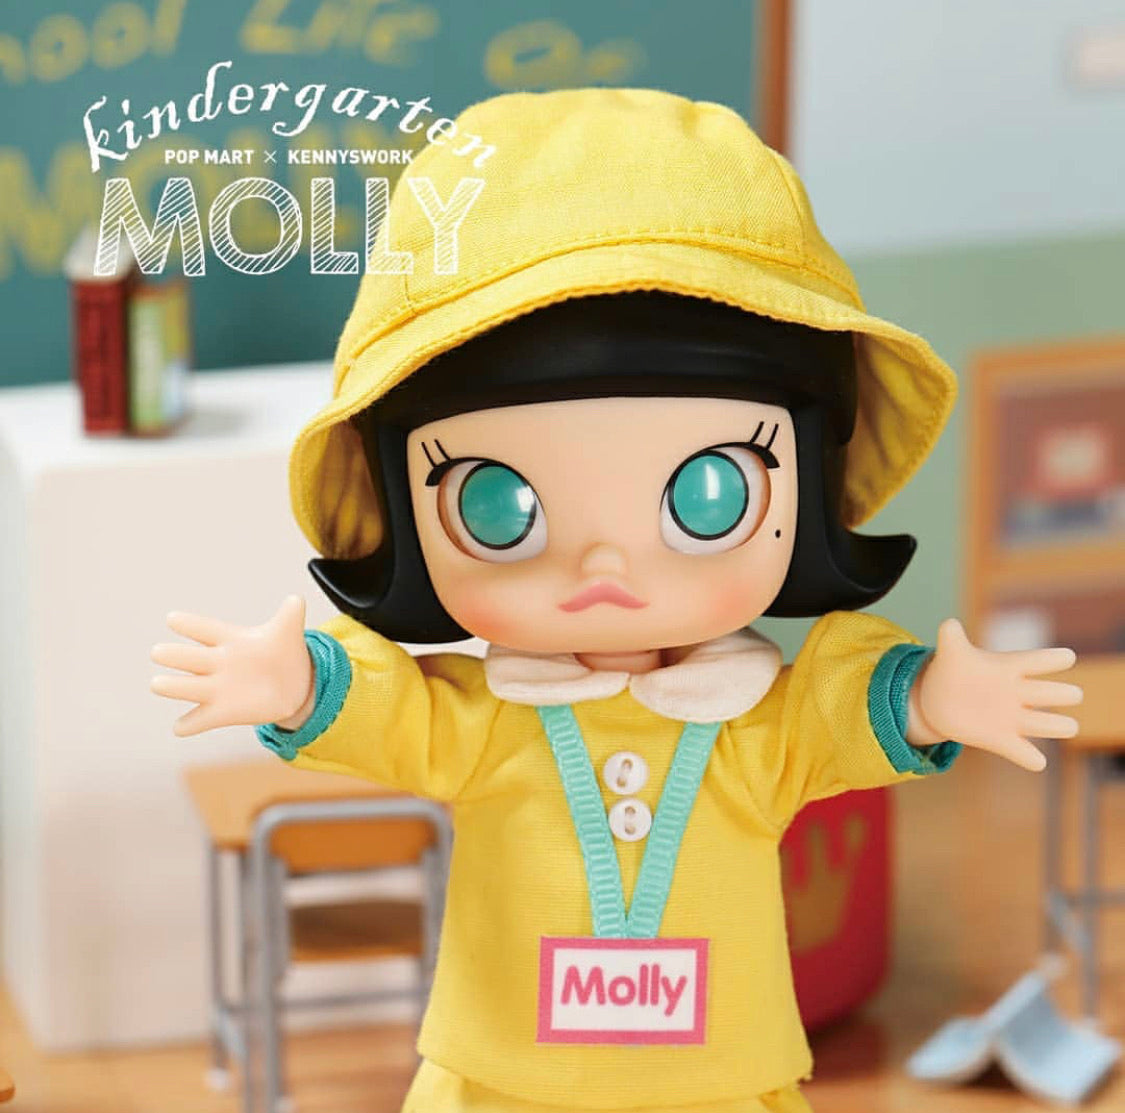 Molly BJD Kindergarten by Kenny Wong